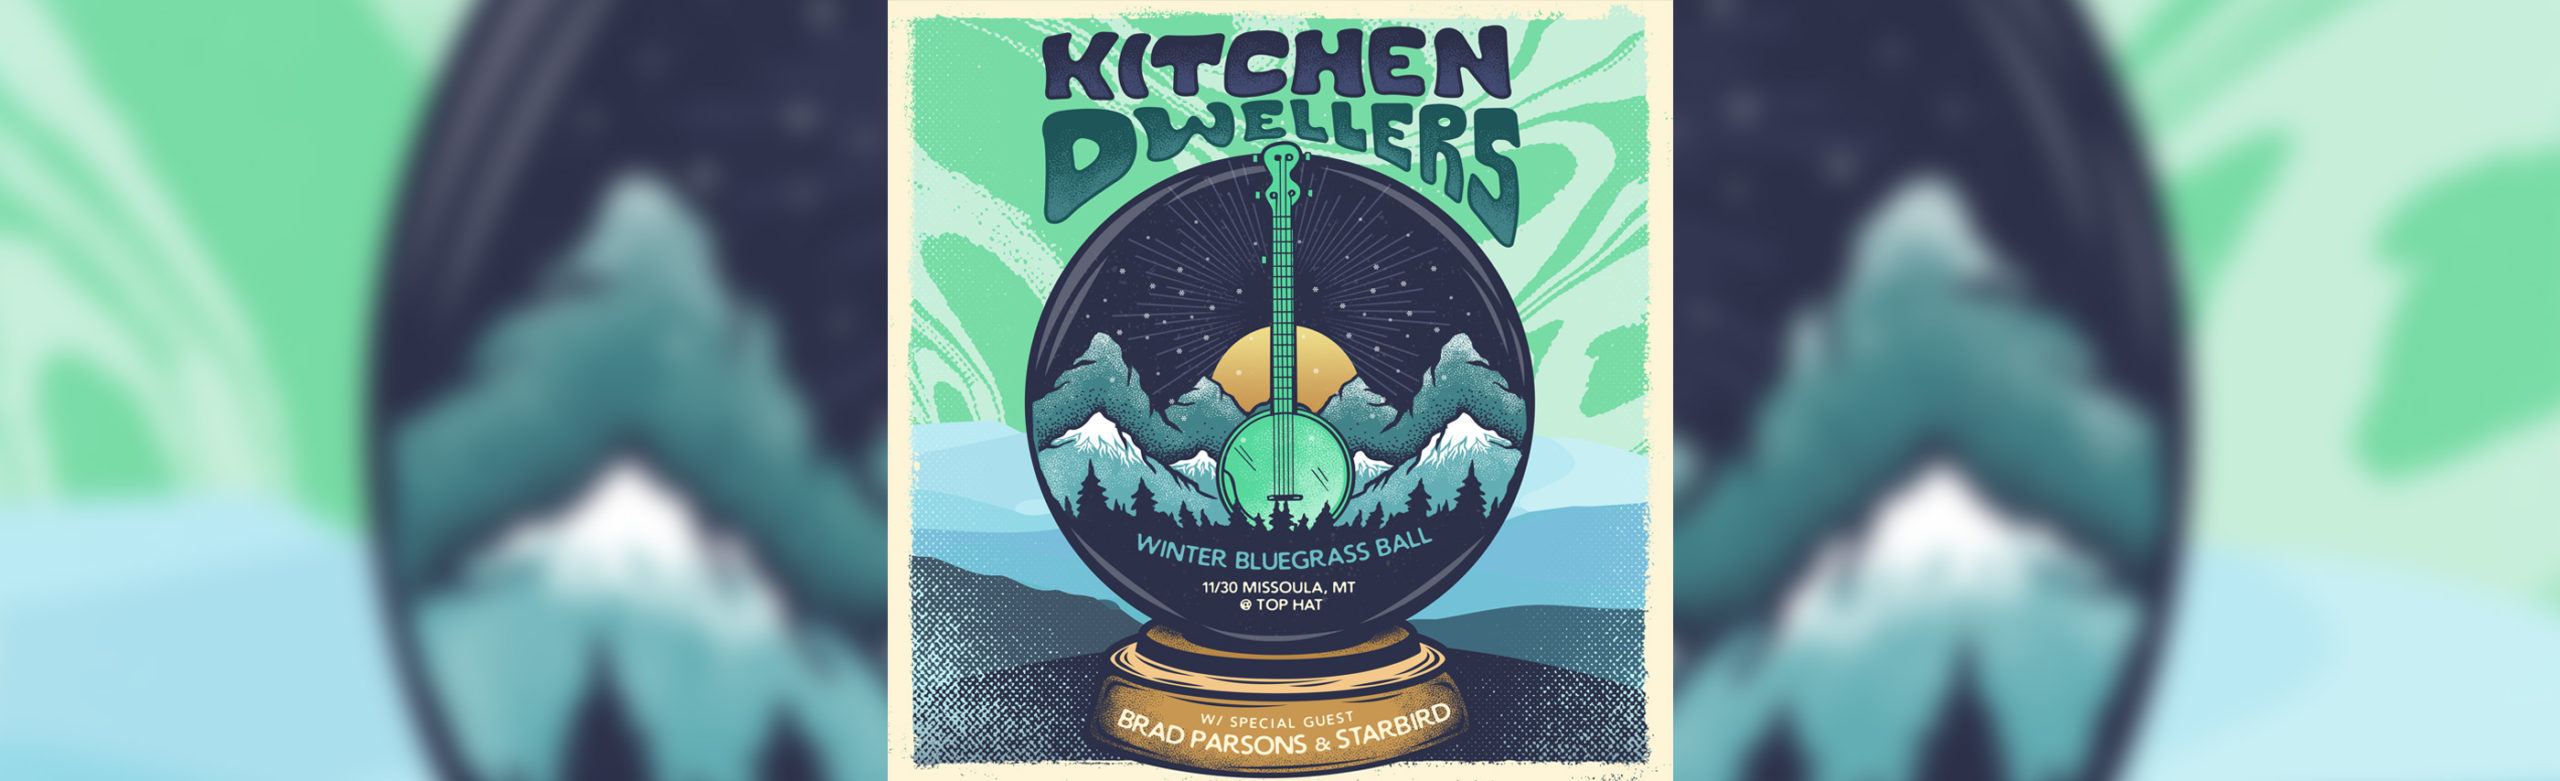 Kitchen Dwellers Ticket + Merch Giveaway Image